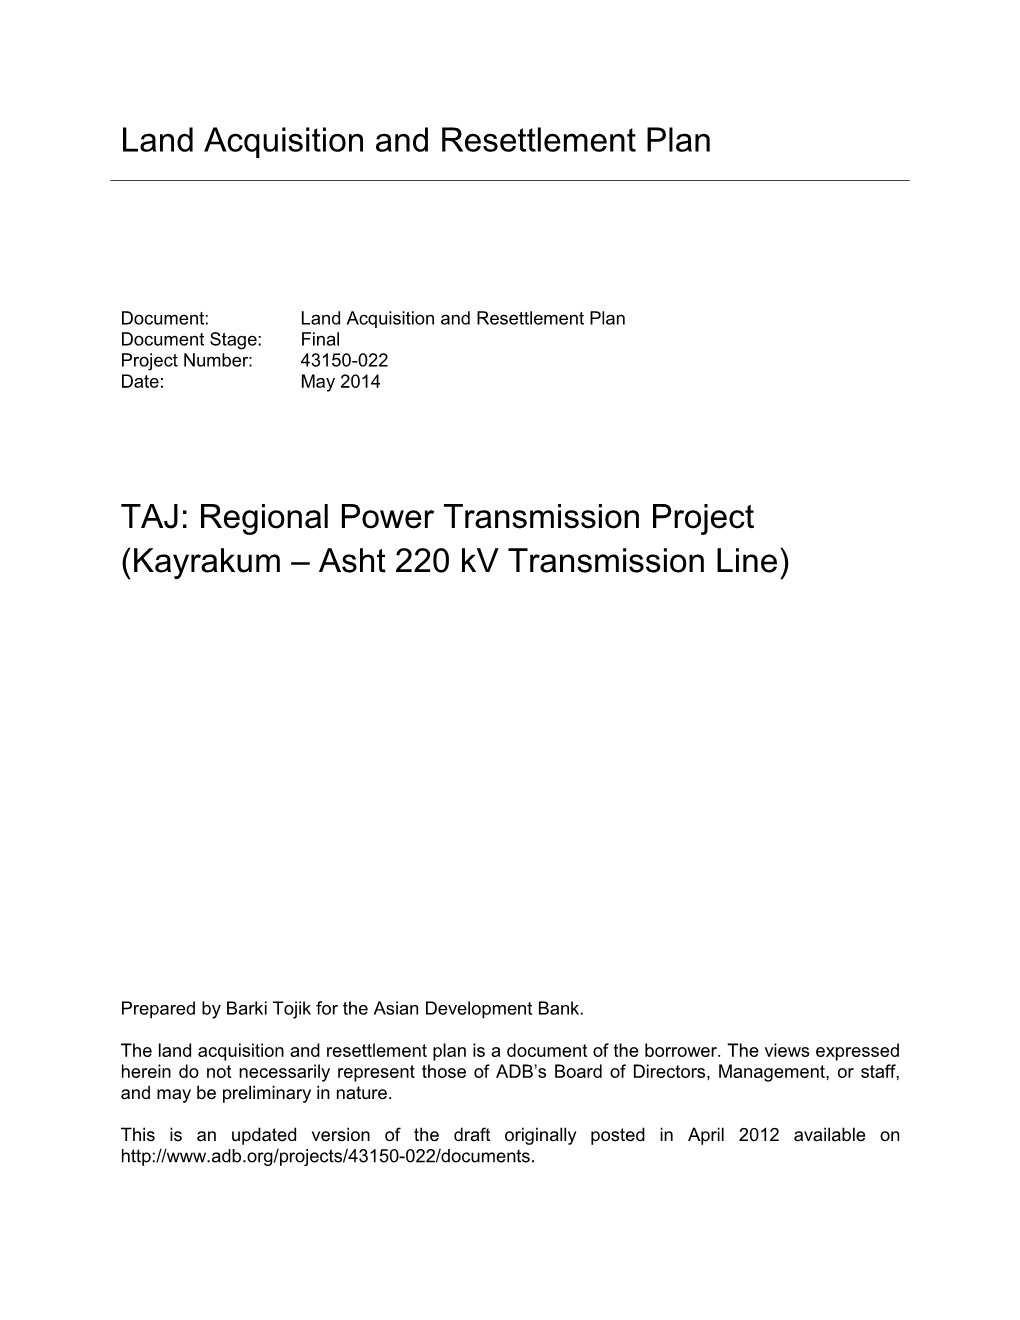 43150-022: Regional Power Transmission Project